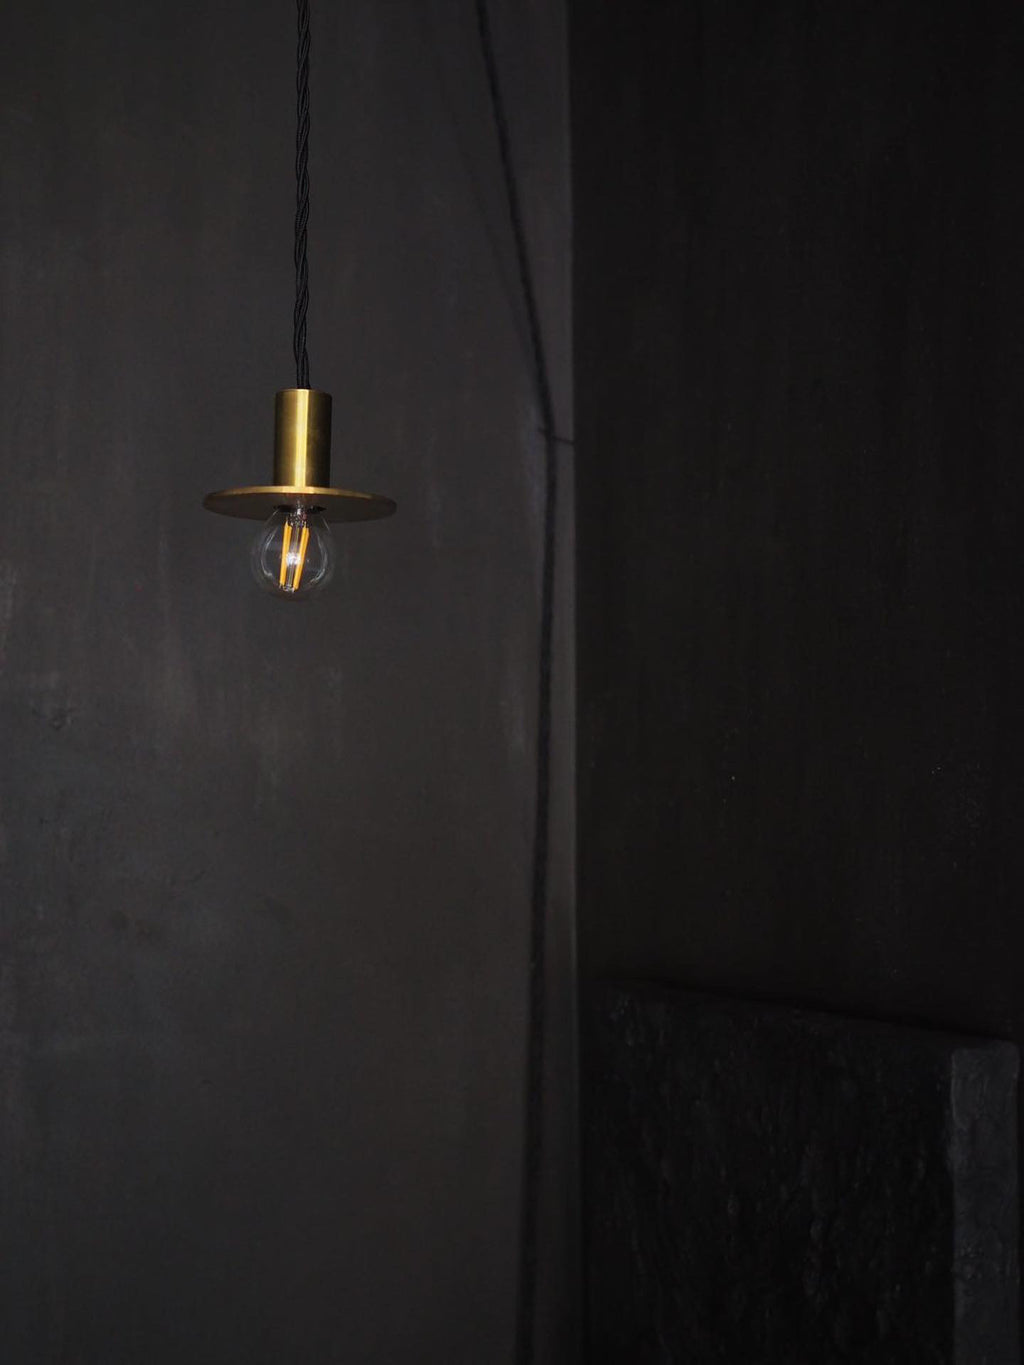 Hanging Light - Brass Gold or Black